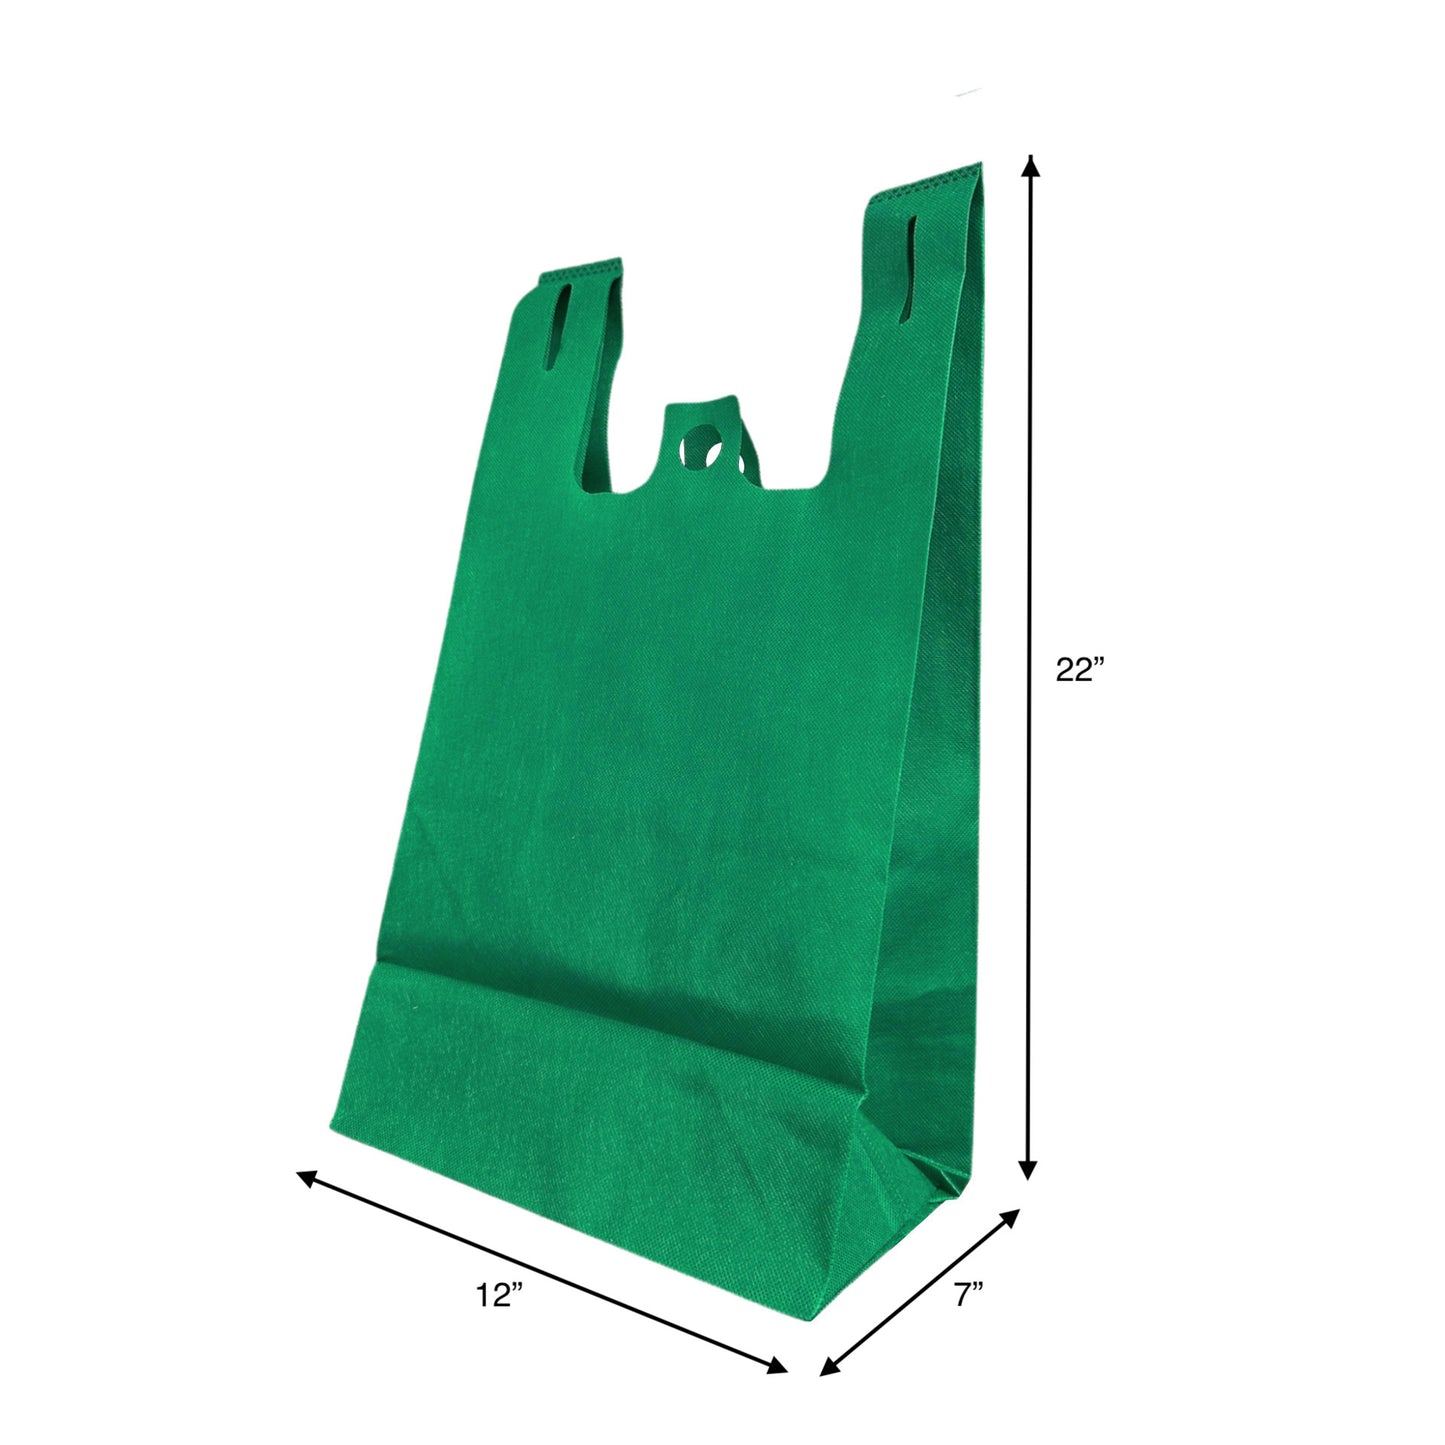 200pcs Non-Woven Reusable T-Shirt Bag 12x7x22x7 inches Dark Green Shopping Bags Square Bottom; $0.57/pc